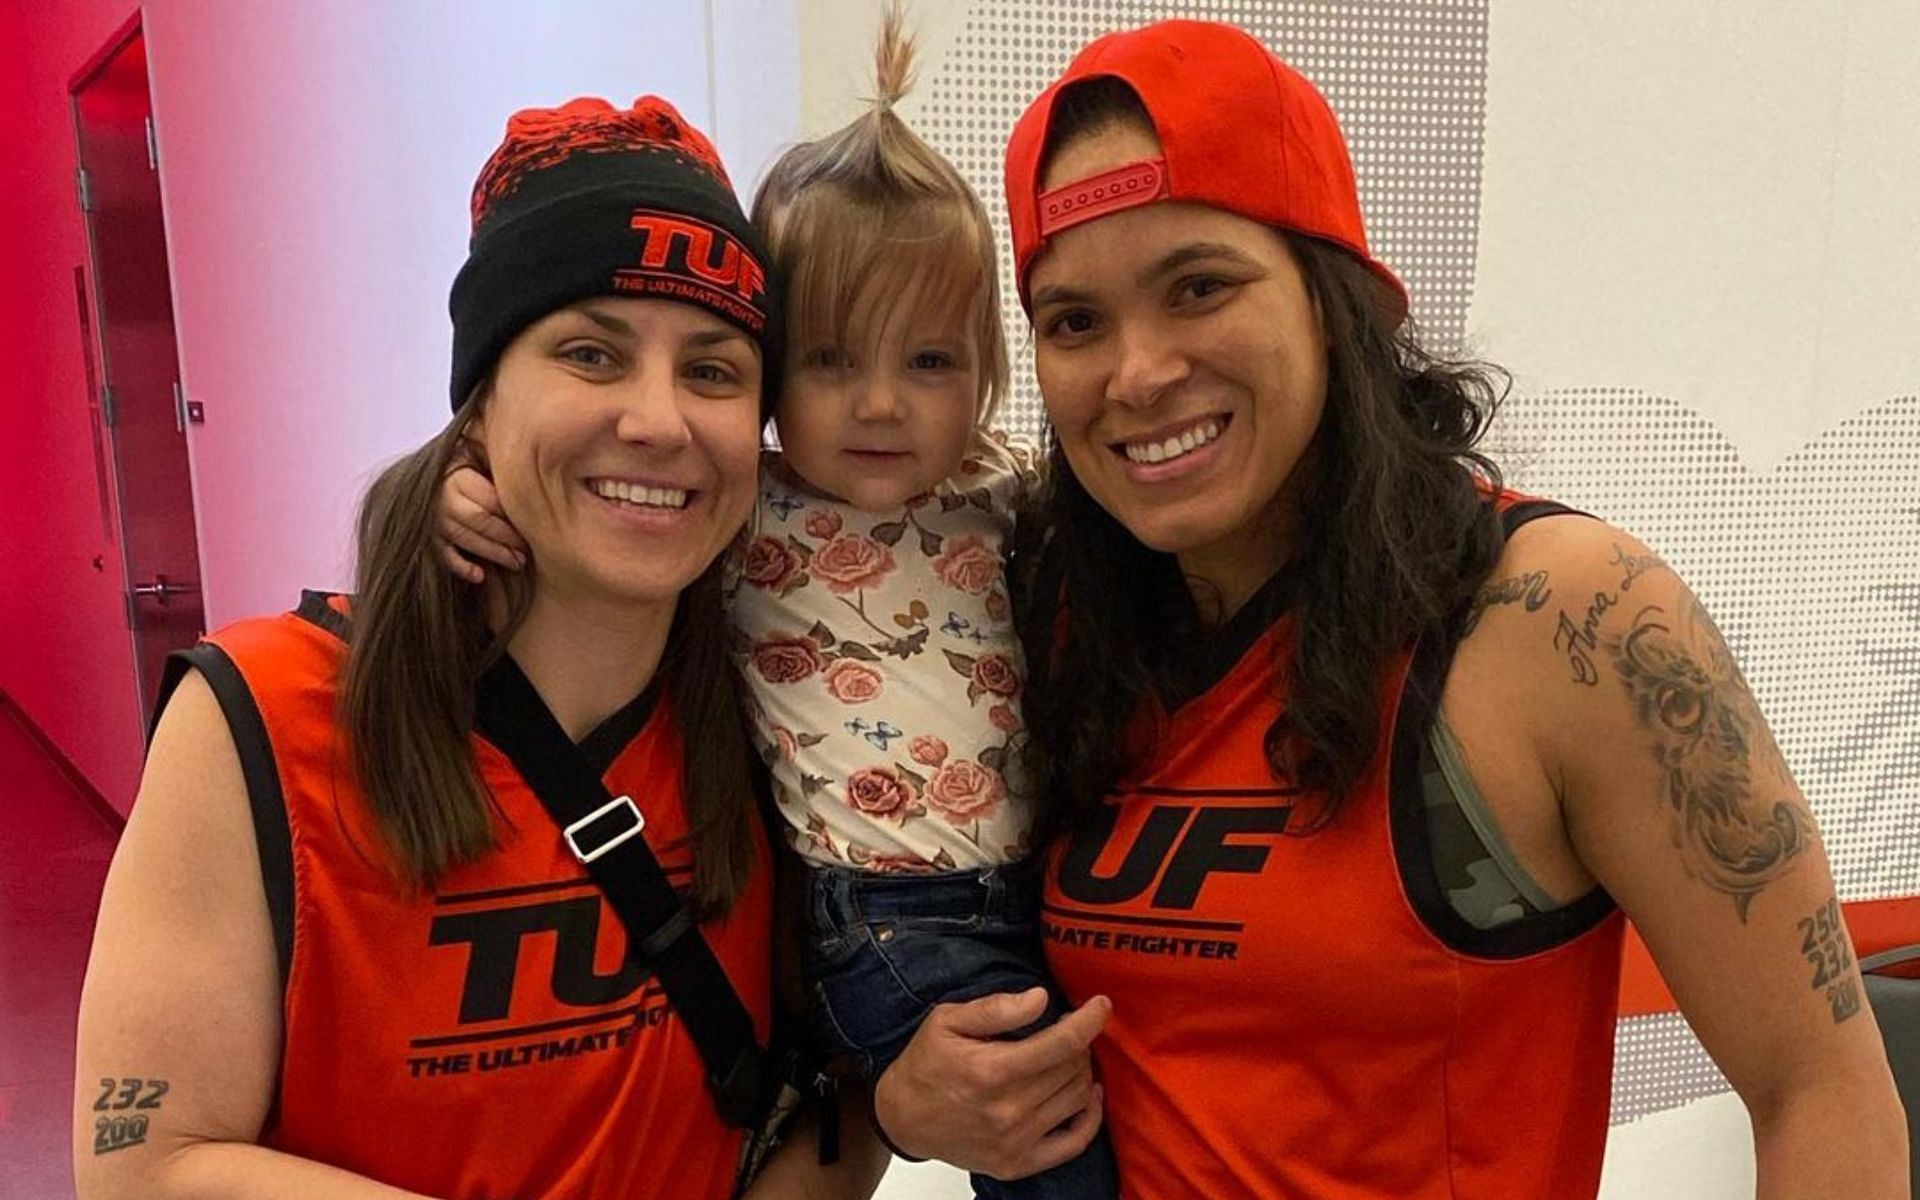 Nina Nunes (left) and Amanda Nunes (right) with daughter (center) [Image courtesy: @amanda_leoa via Instagram]